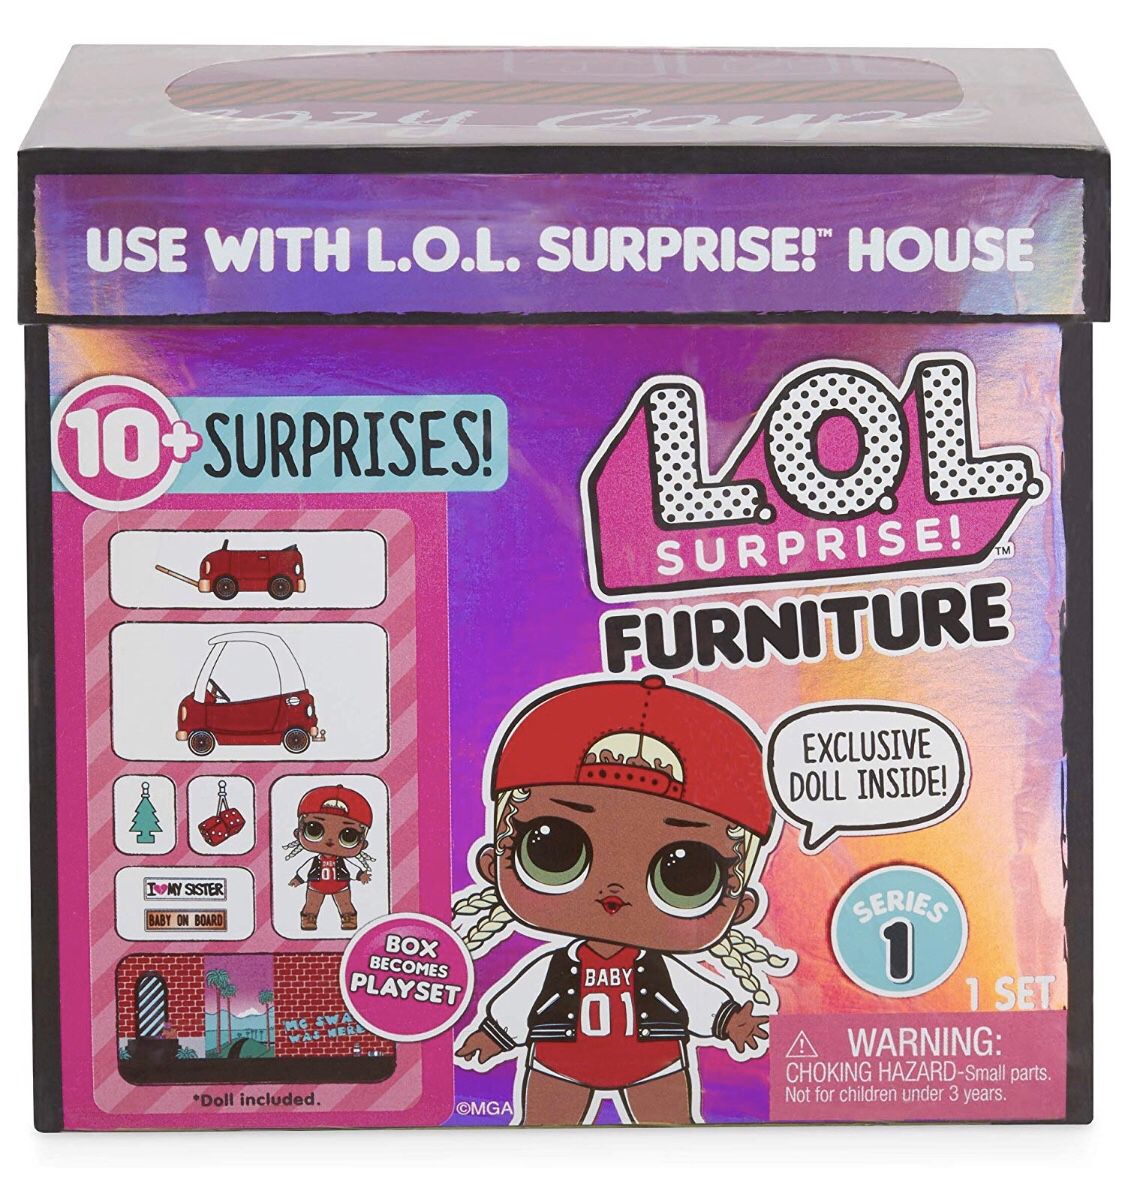 LOL SURPRISE! Furniture COZY COUPE with 10+ surprises s